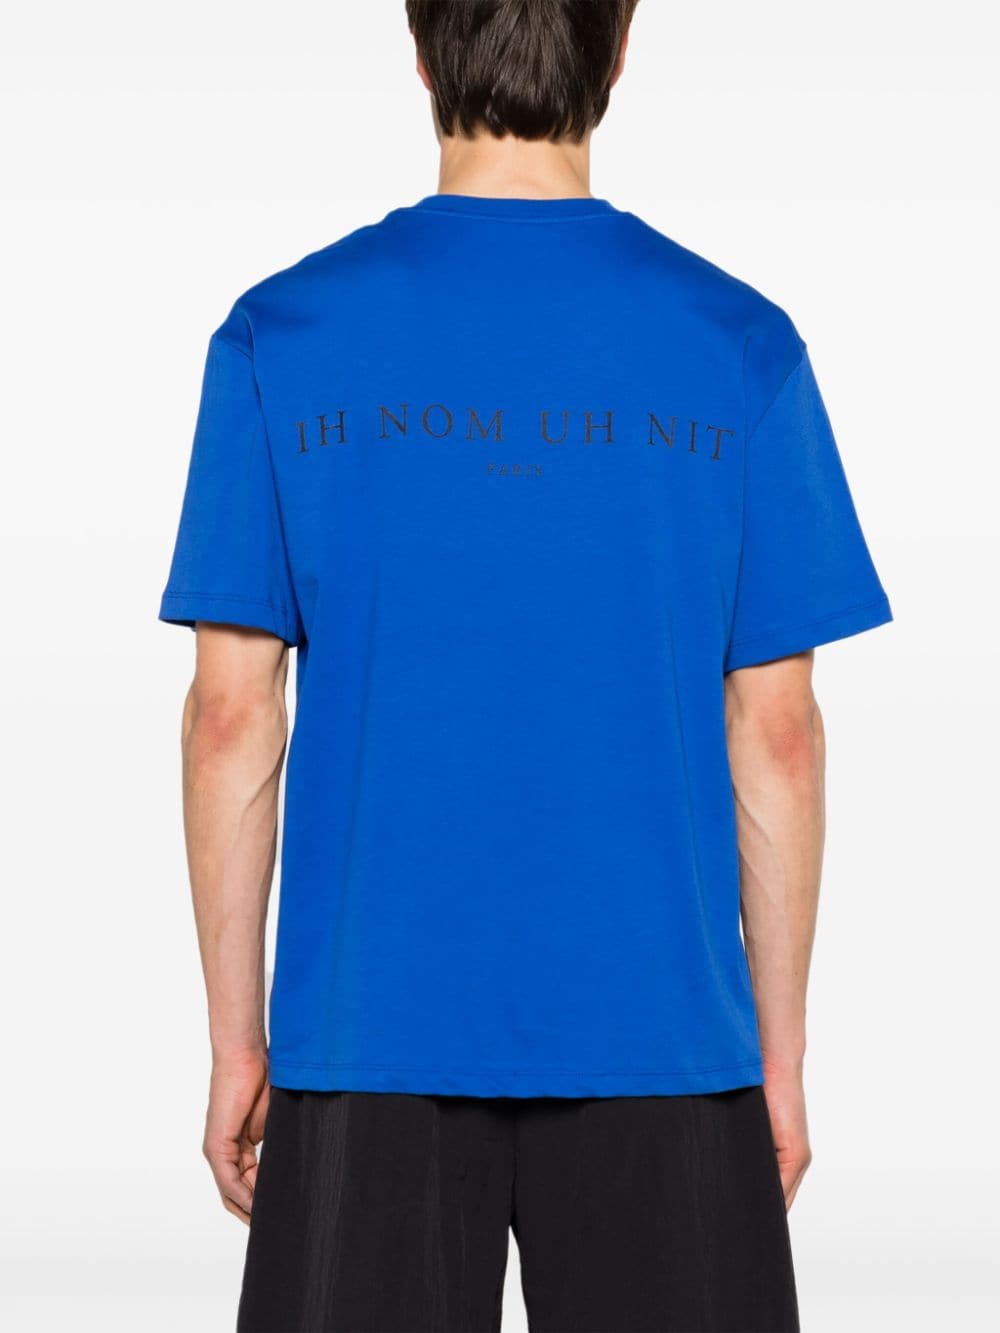 Royal blue T-shirt with logo writing